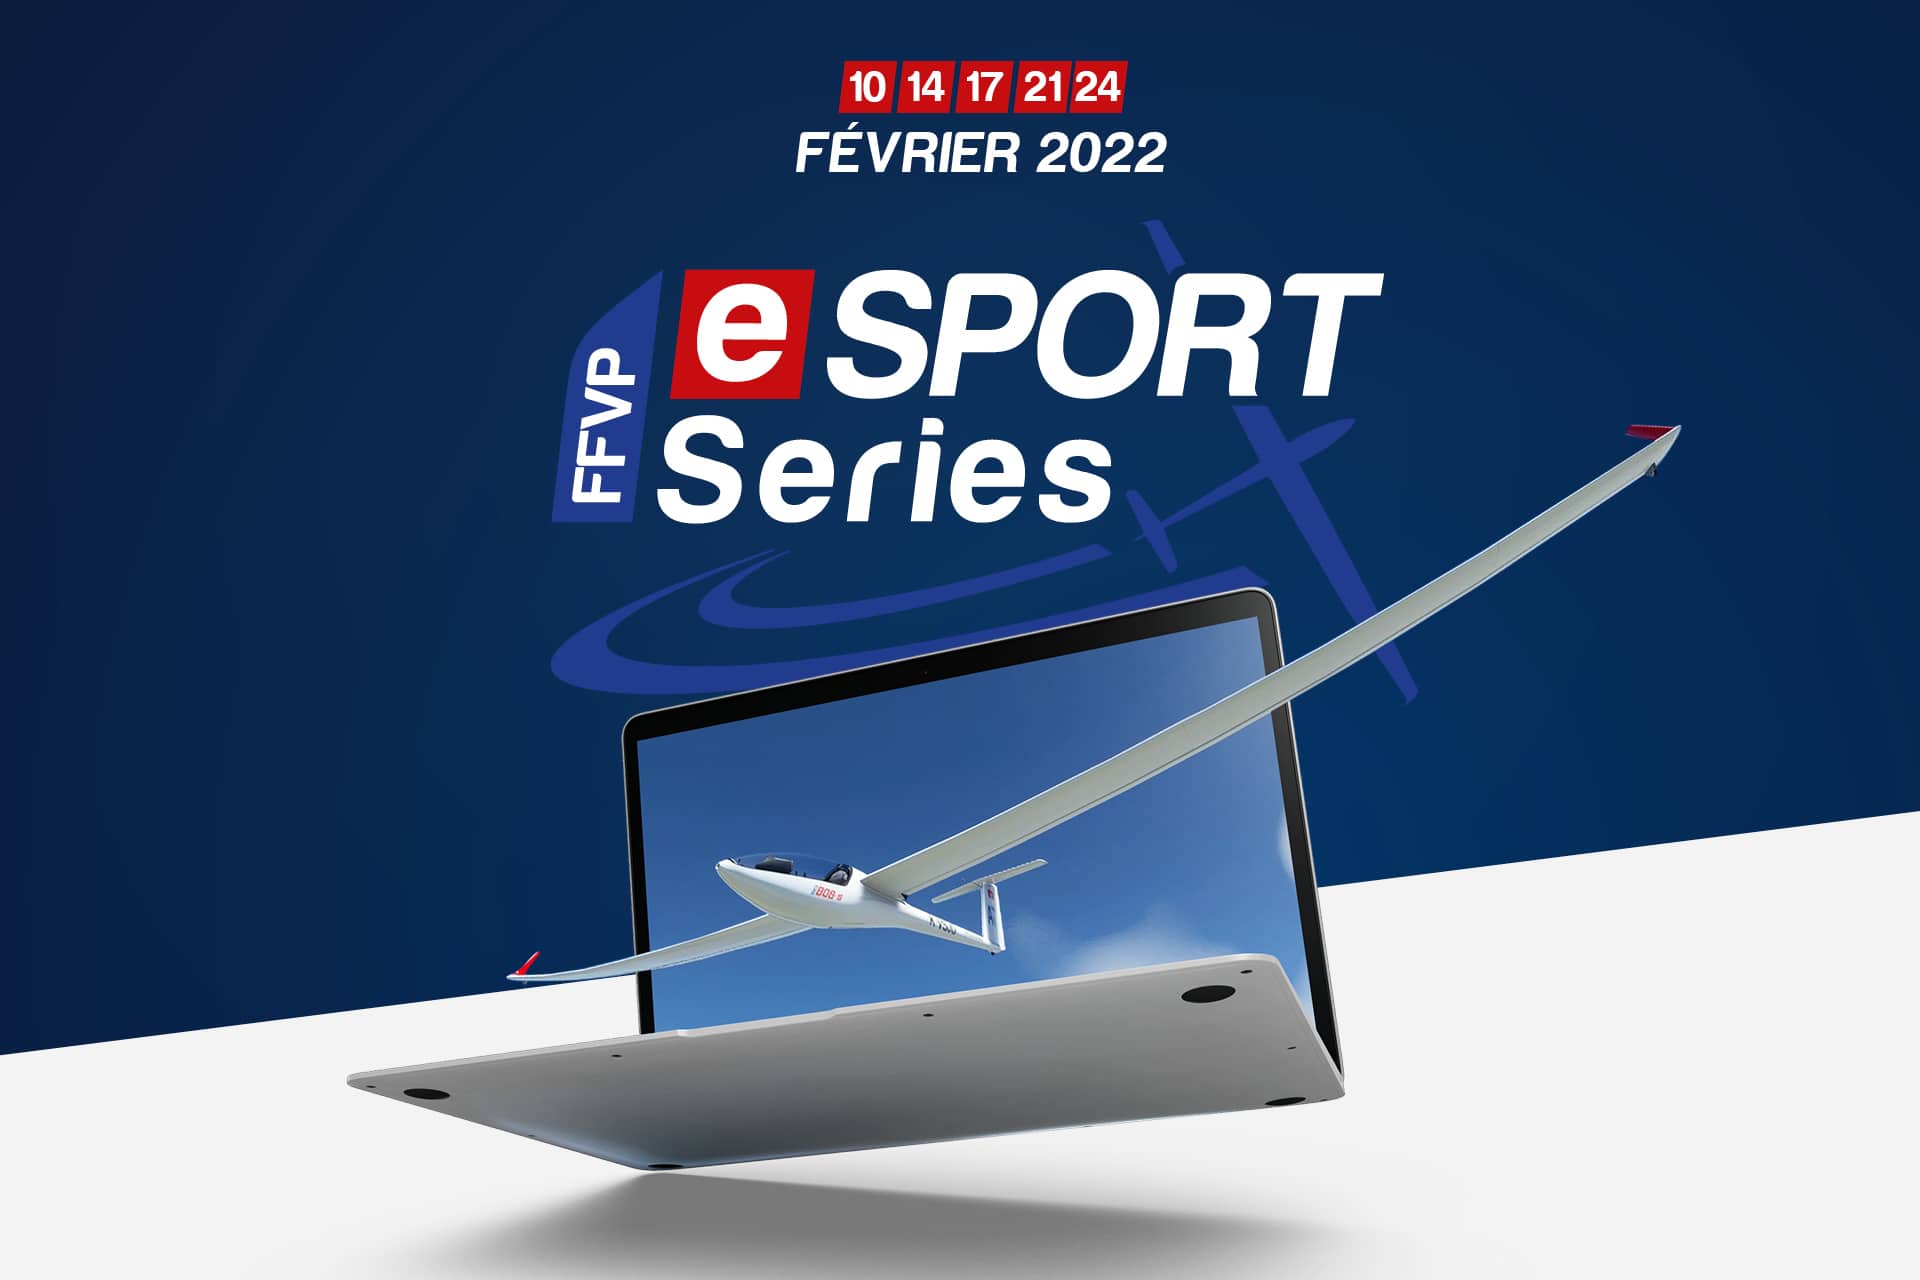 FFVP eSport Series février 2022